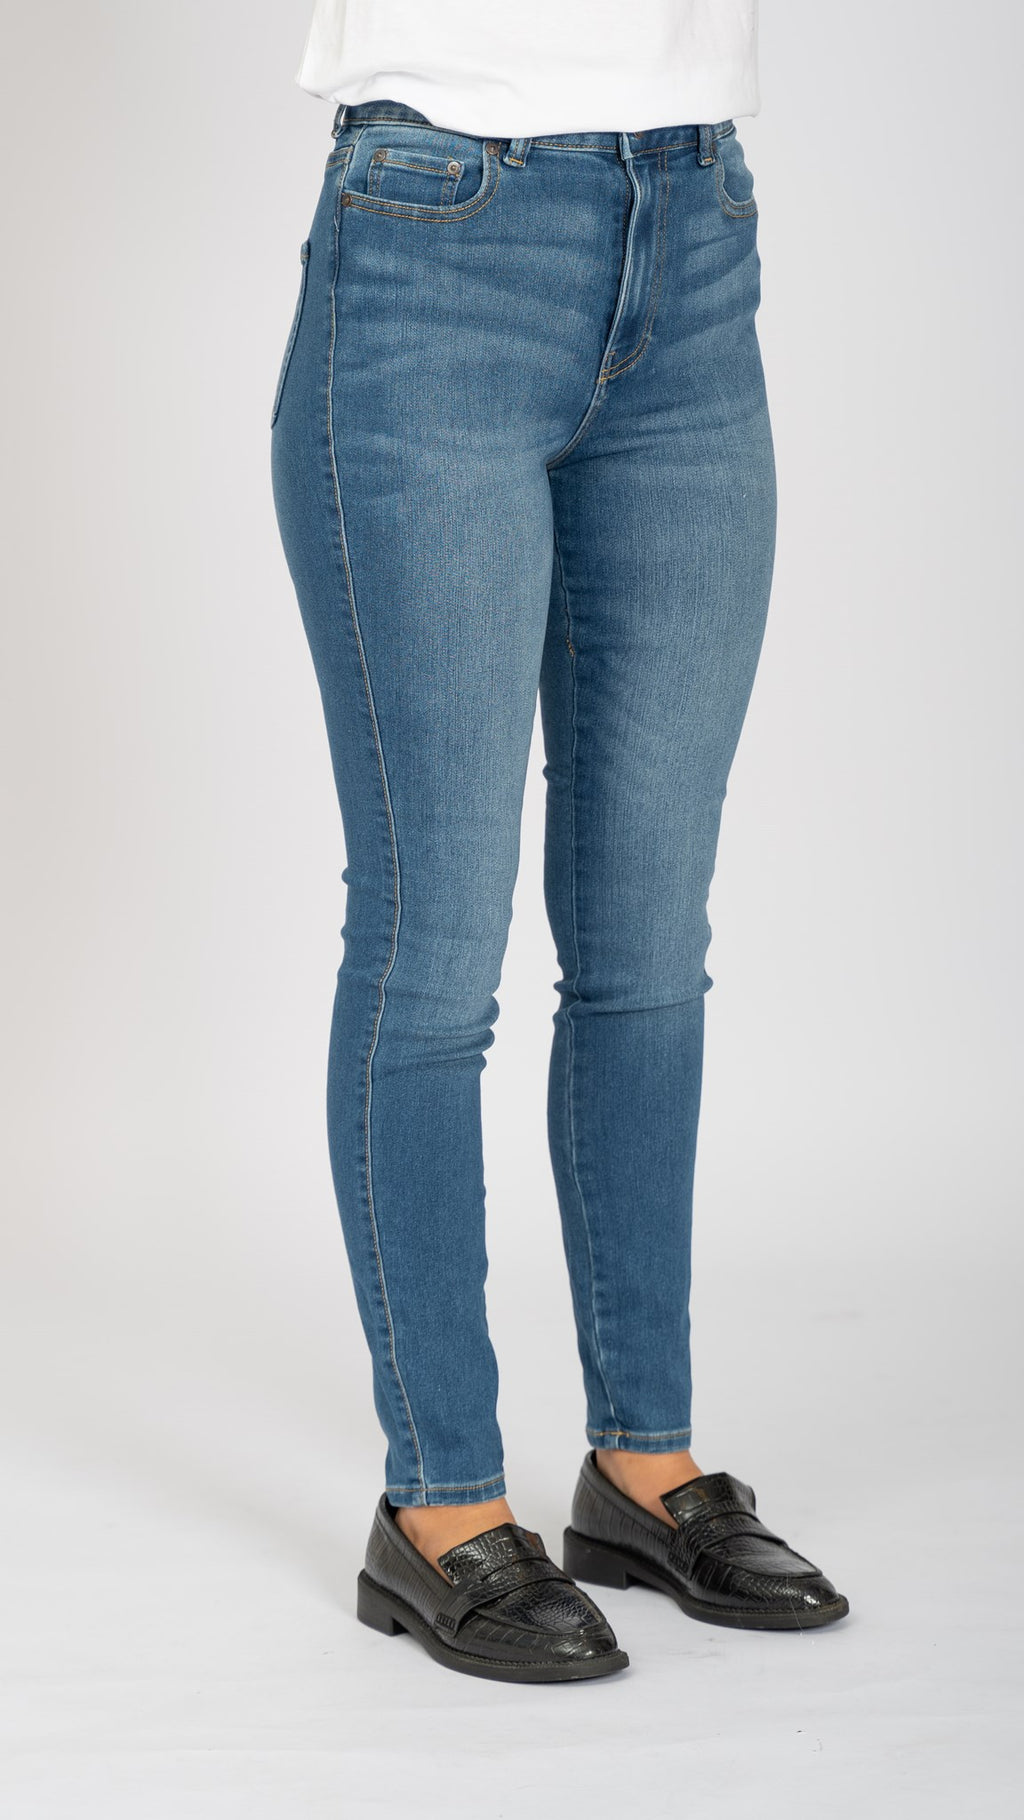 Performance Skinny Jeans - Light Blue Denim